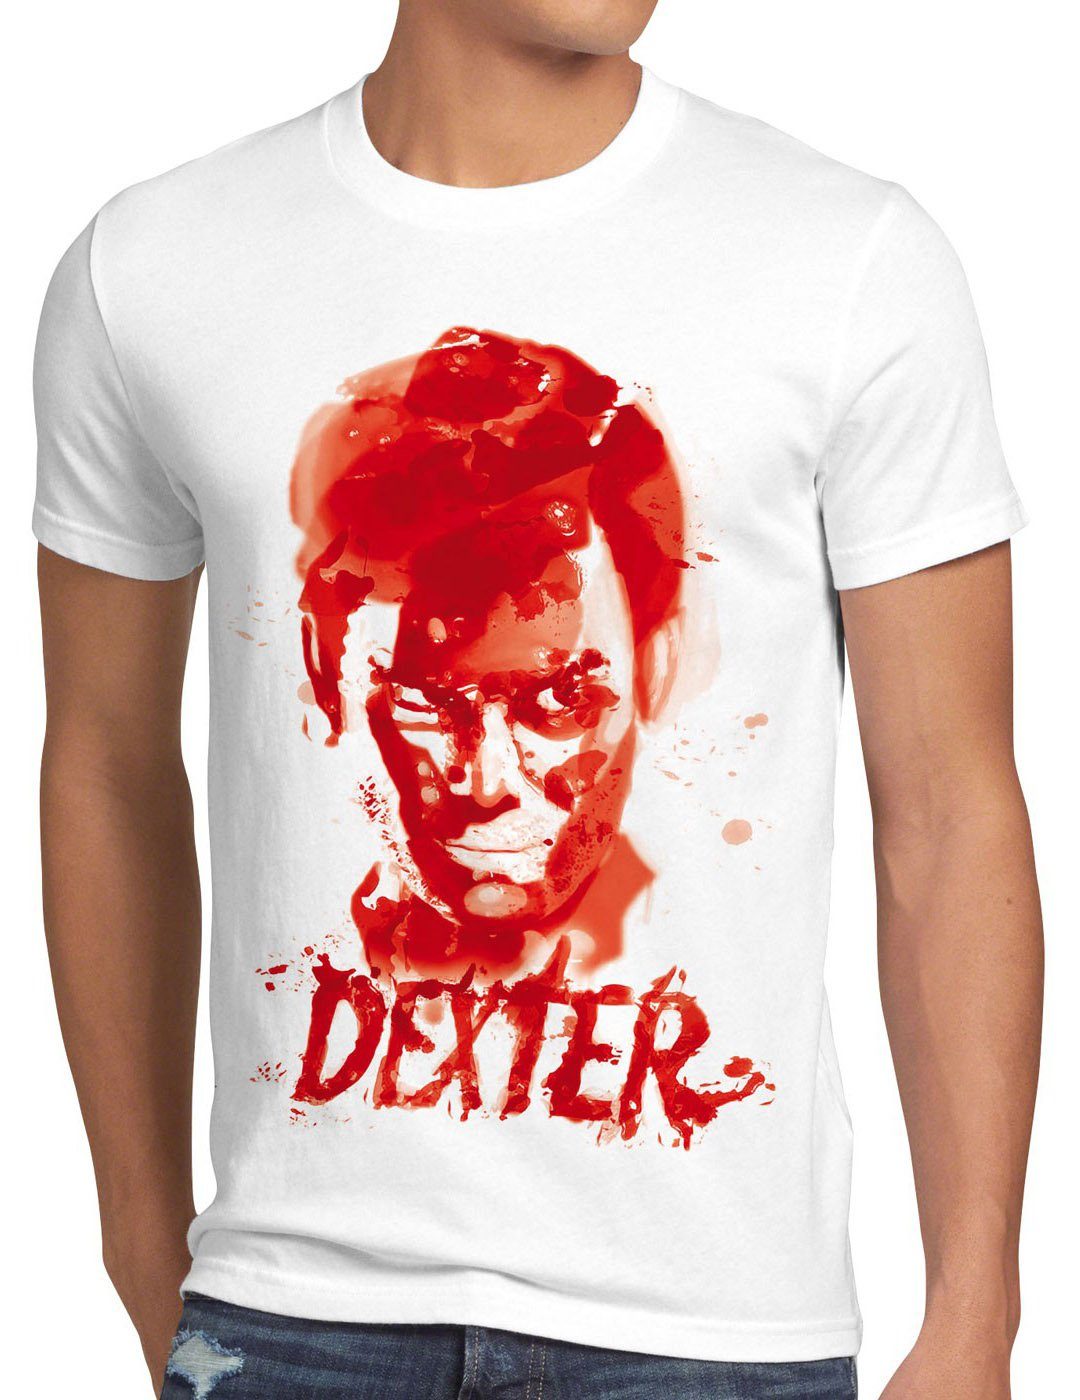 style3 Print-Shirt Herren T-Shirt DEXTER Miami blut mord morgan trinity serienkiller dvd tv weiß